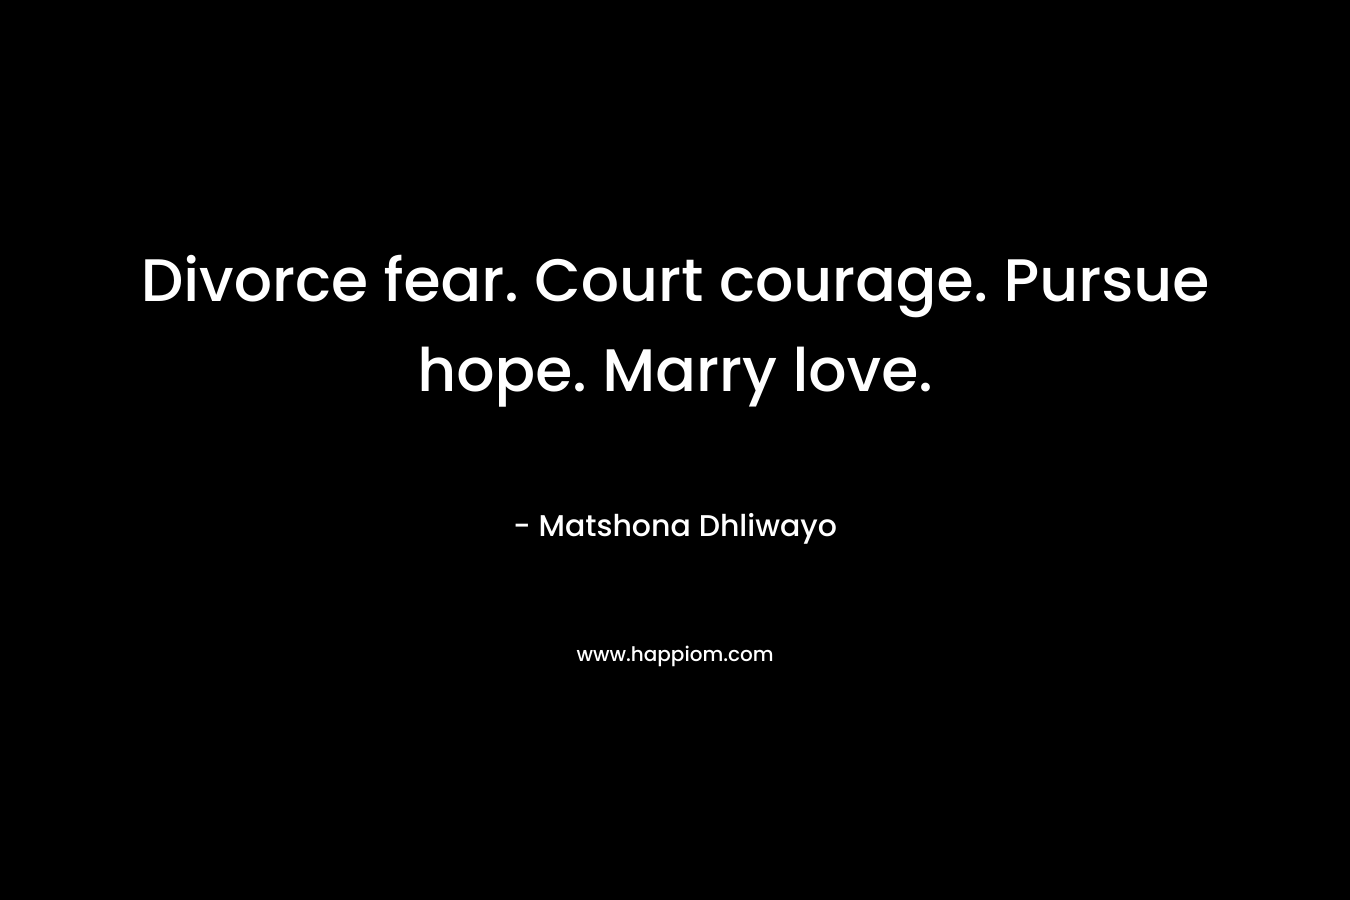 Divorce fear. Court courage. Pursue hope. Marry love.